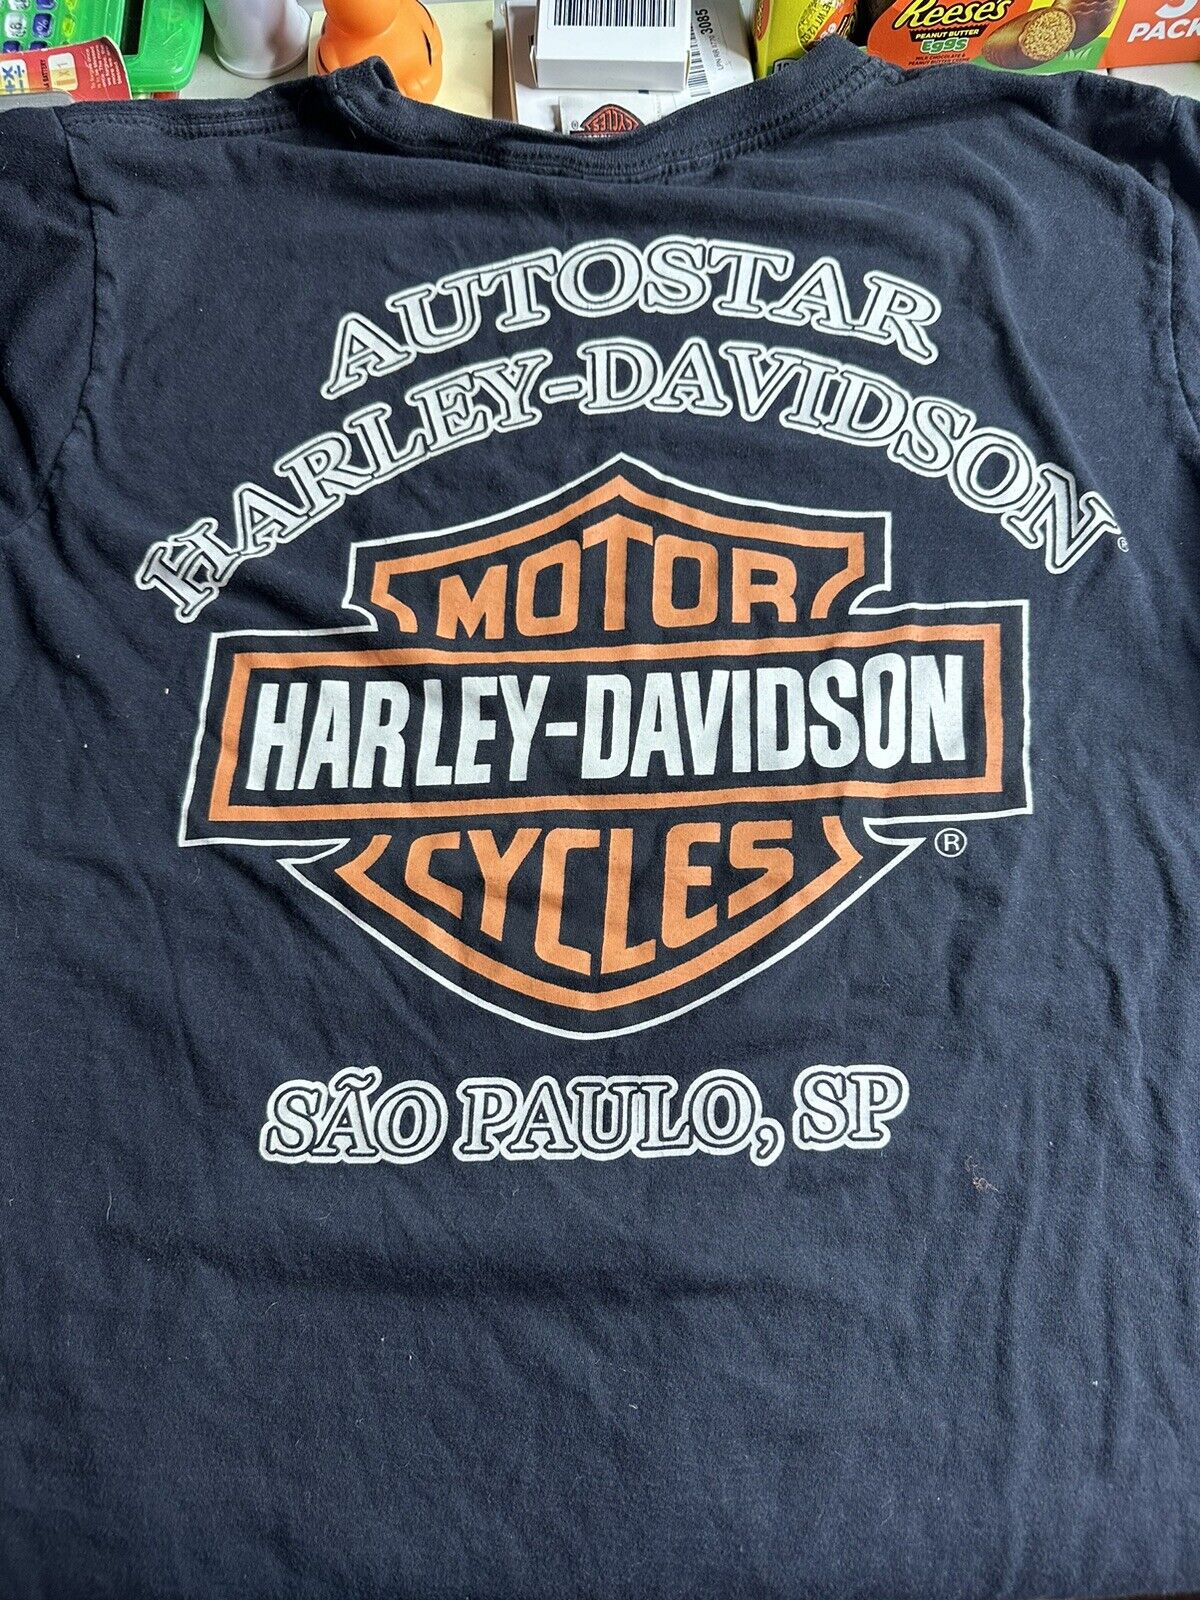 Auto star Harley-Davidson Sao Paulo,SP Size Medium